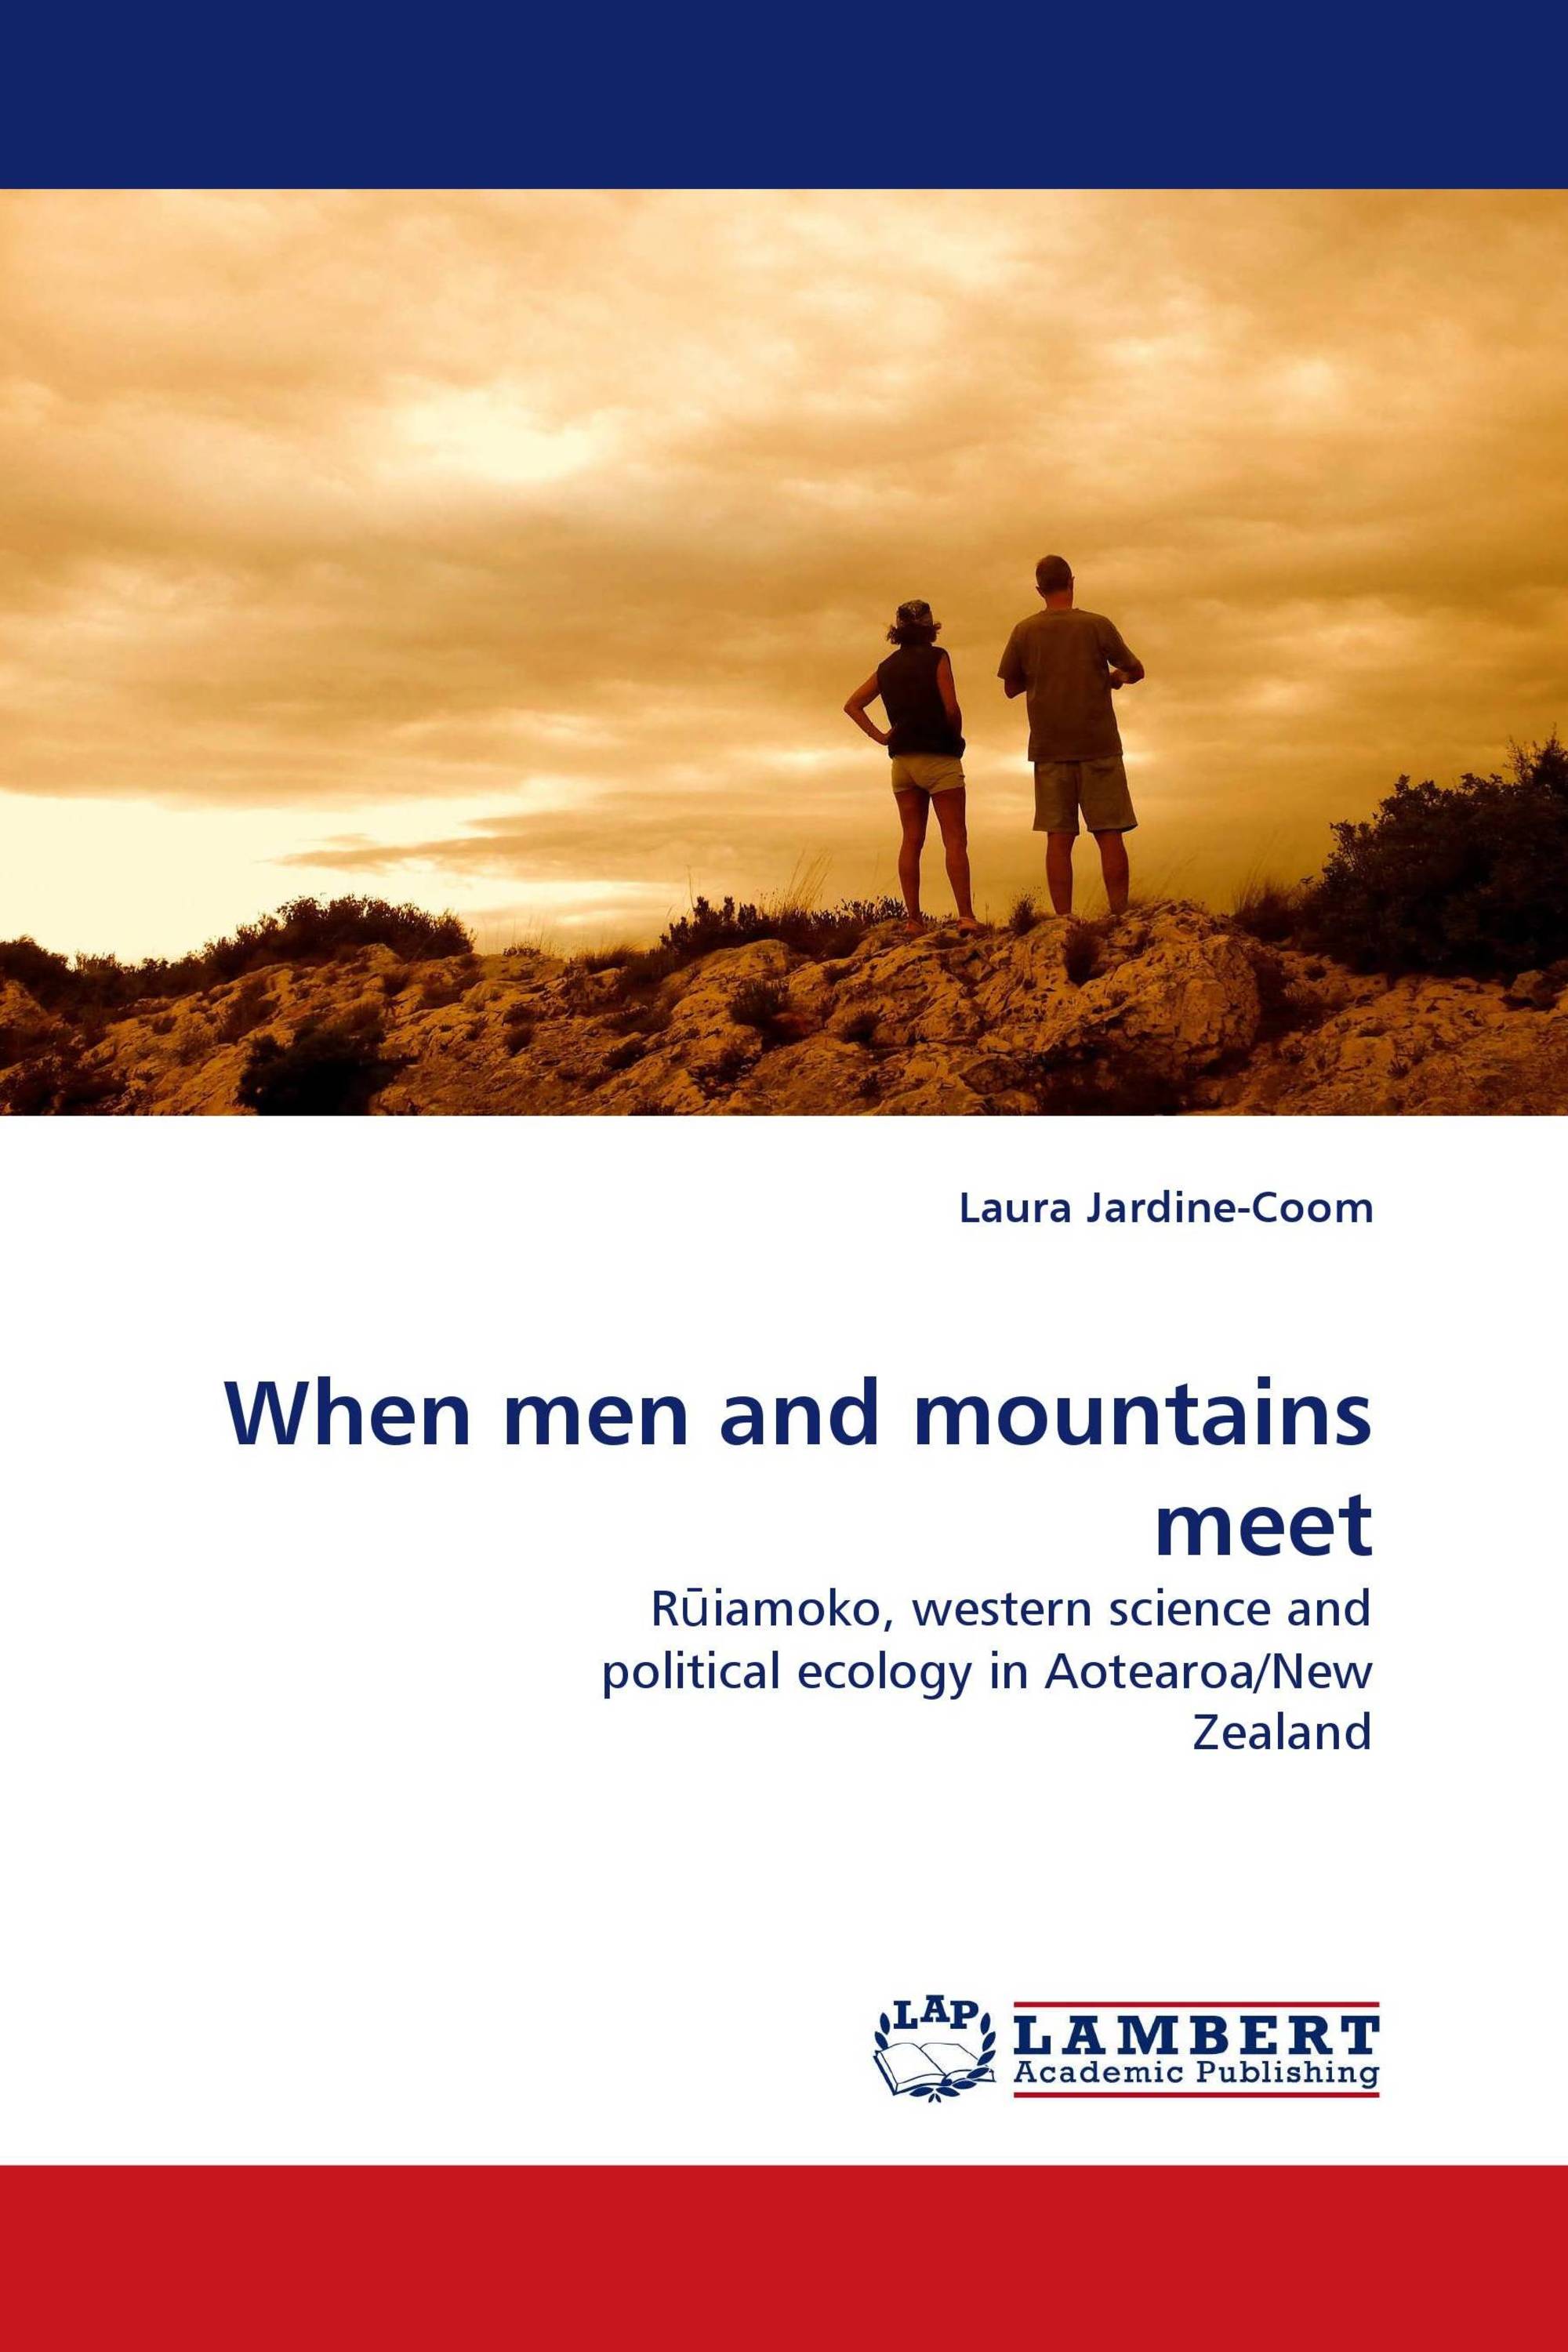 When men and mountains meet